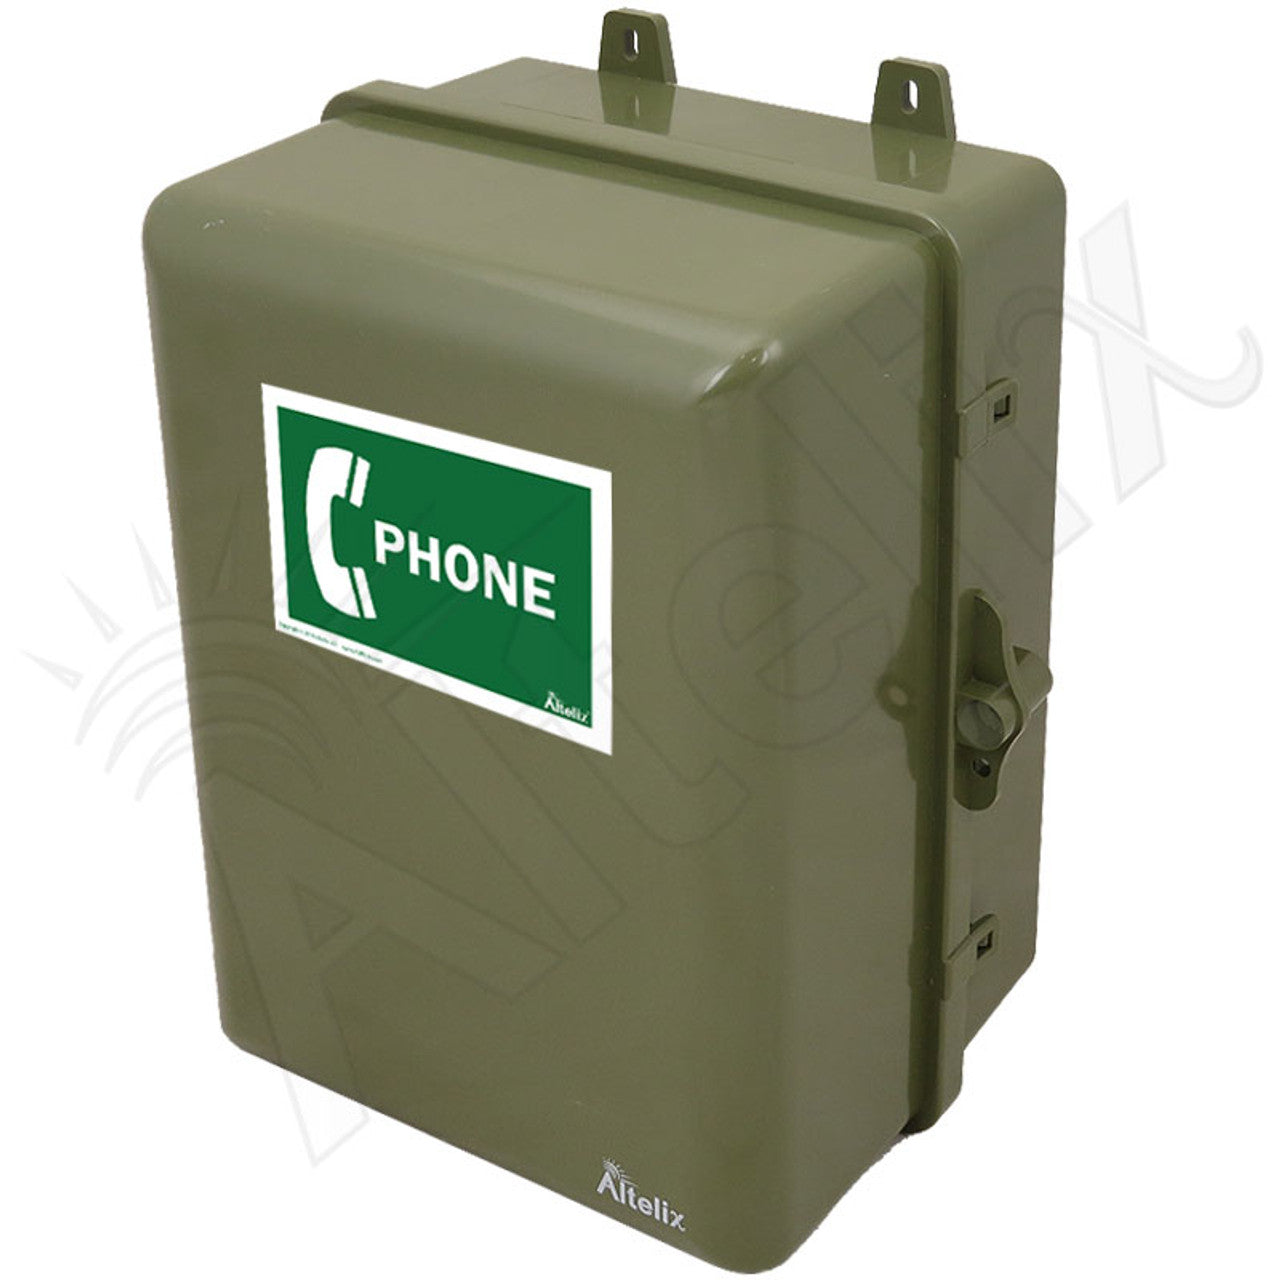 Altelix 12x9x7 IP66 NEMA 4X Outdoor Weatherproof Phone Call Box with Phone Label-3